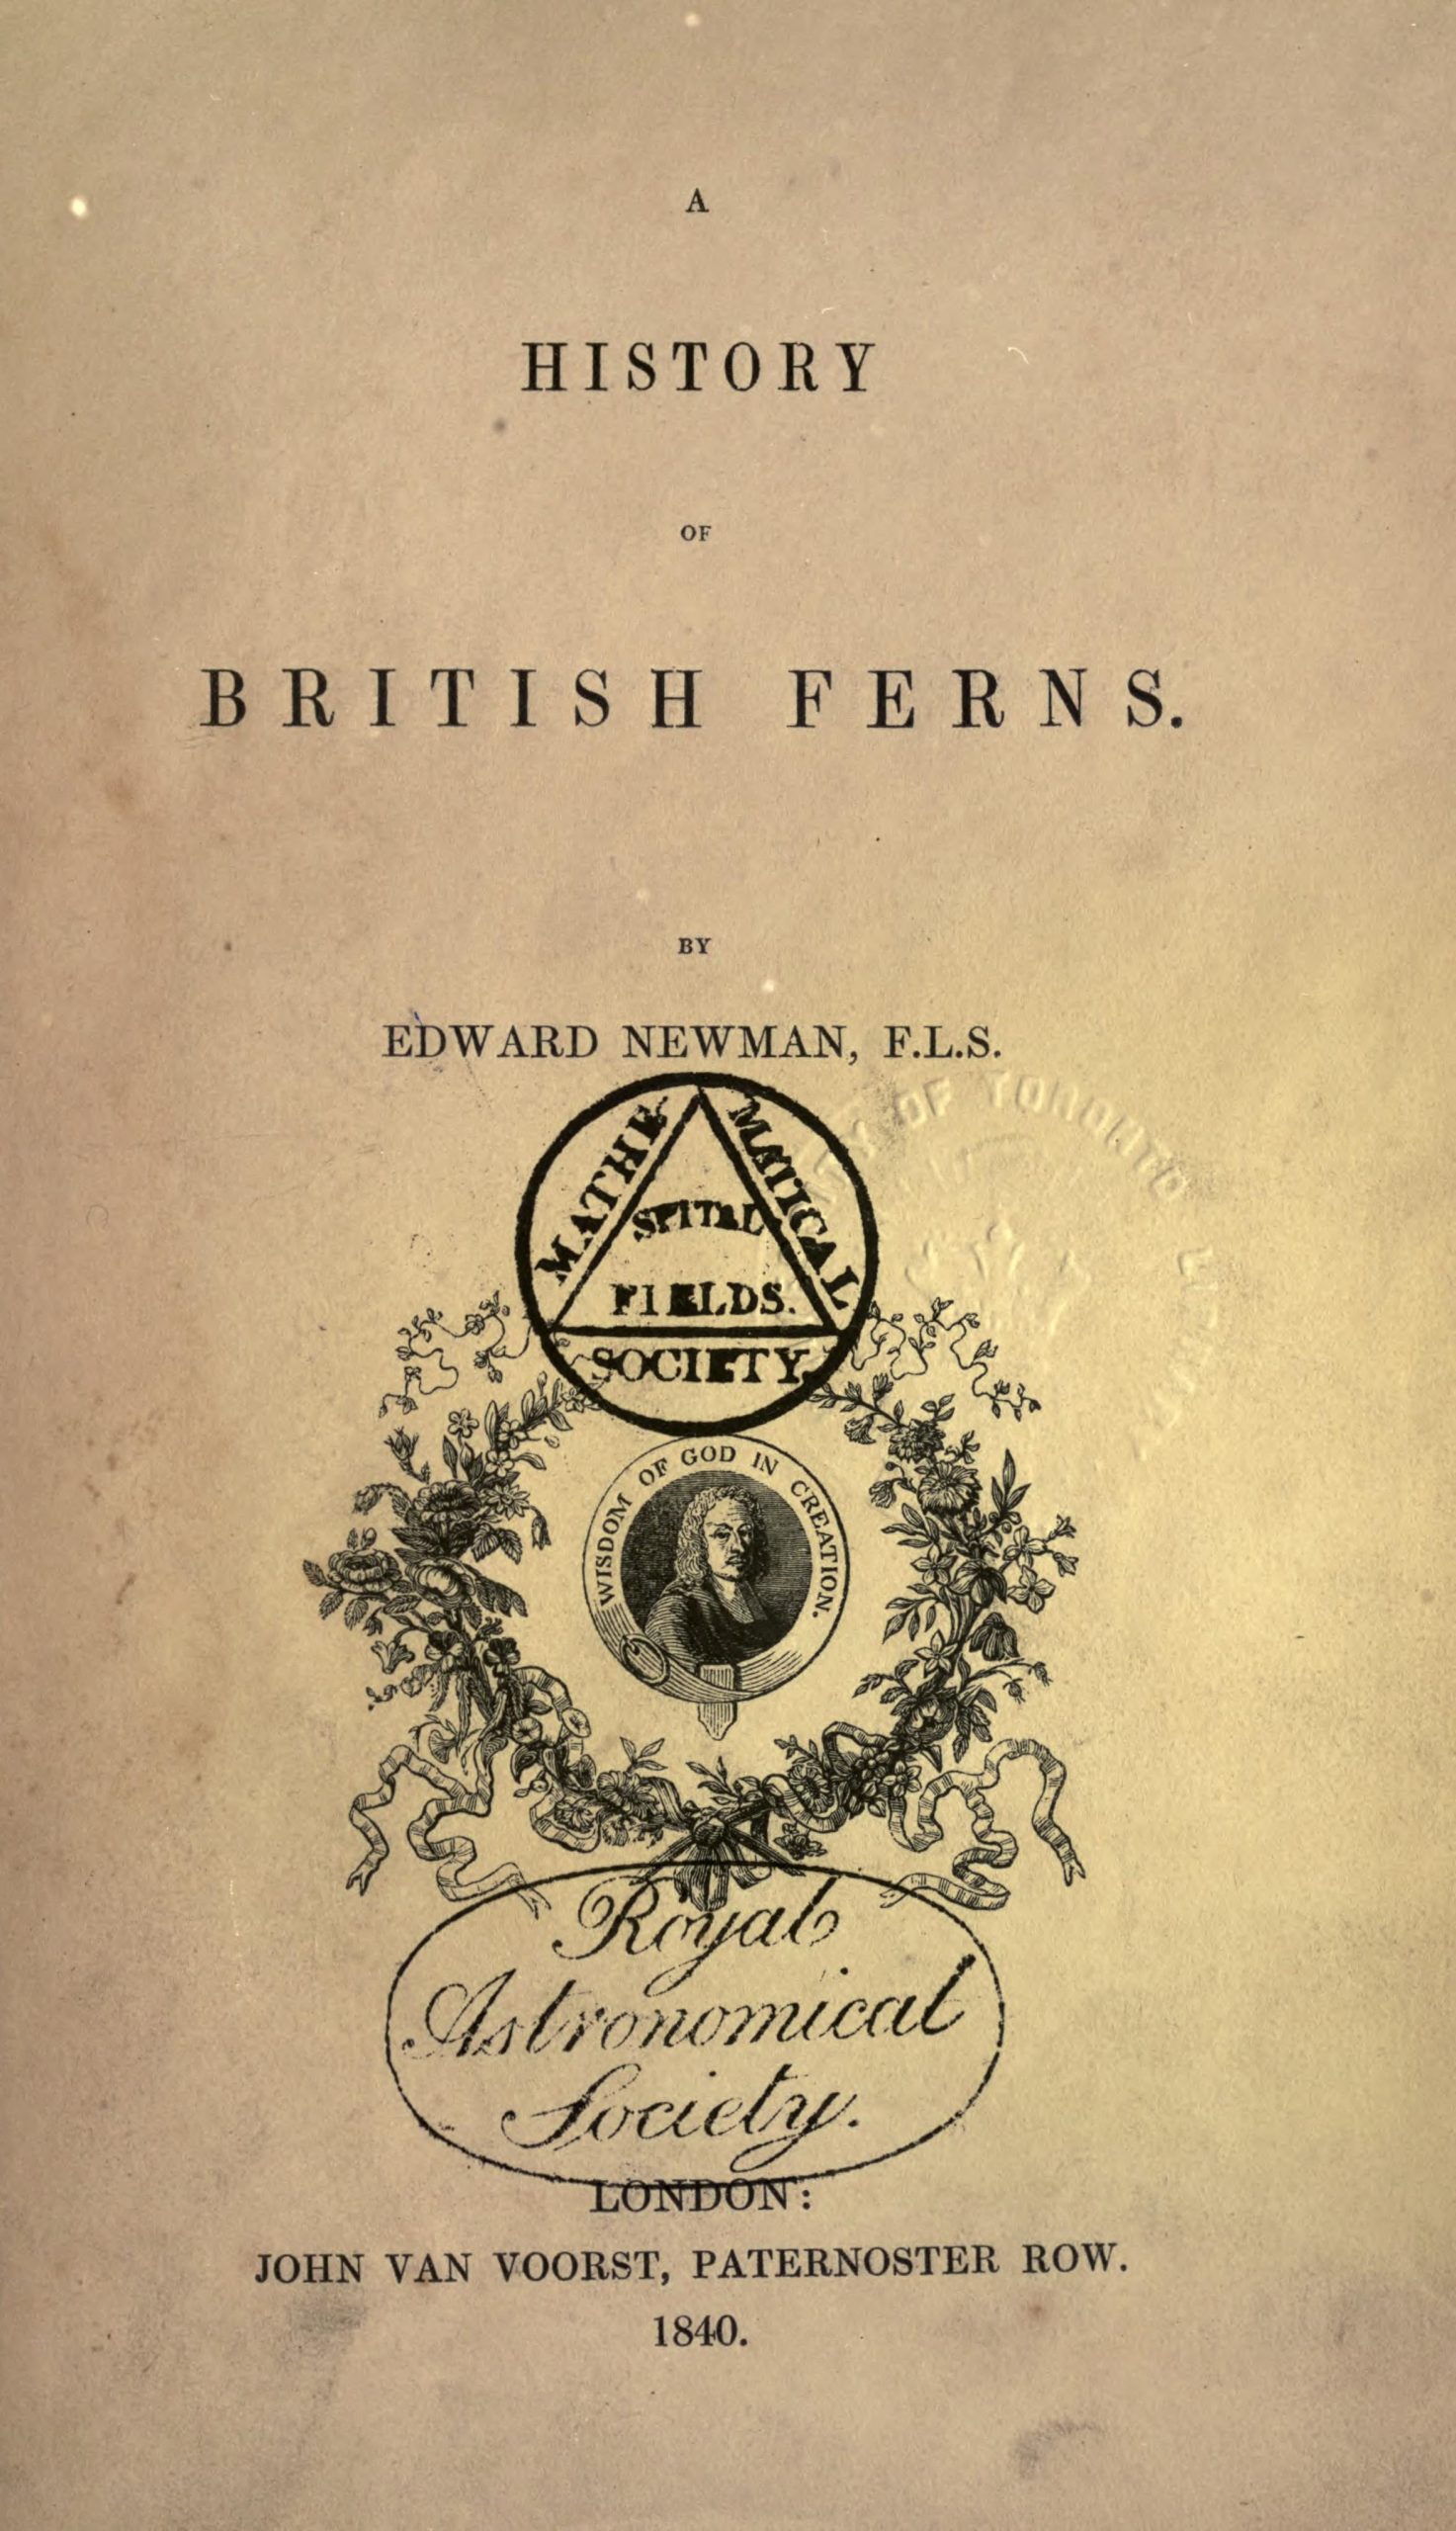 title page of british ferns